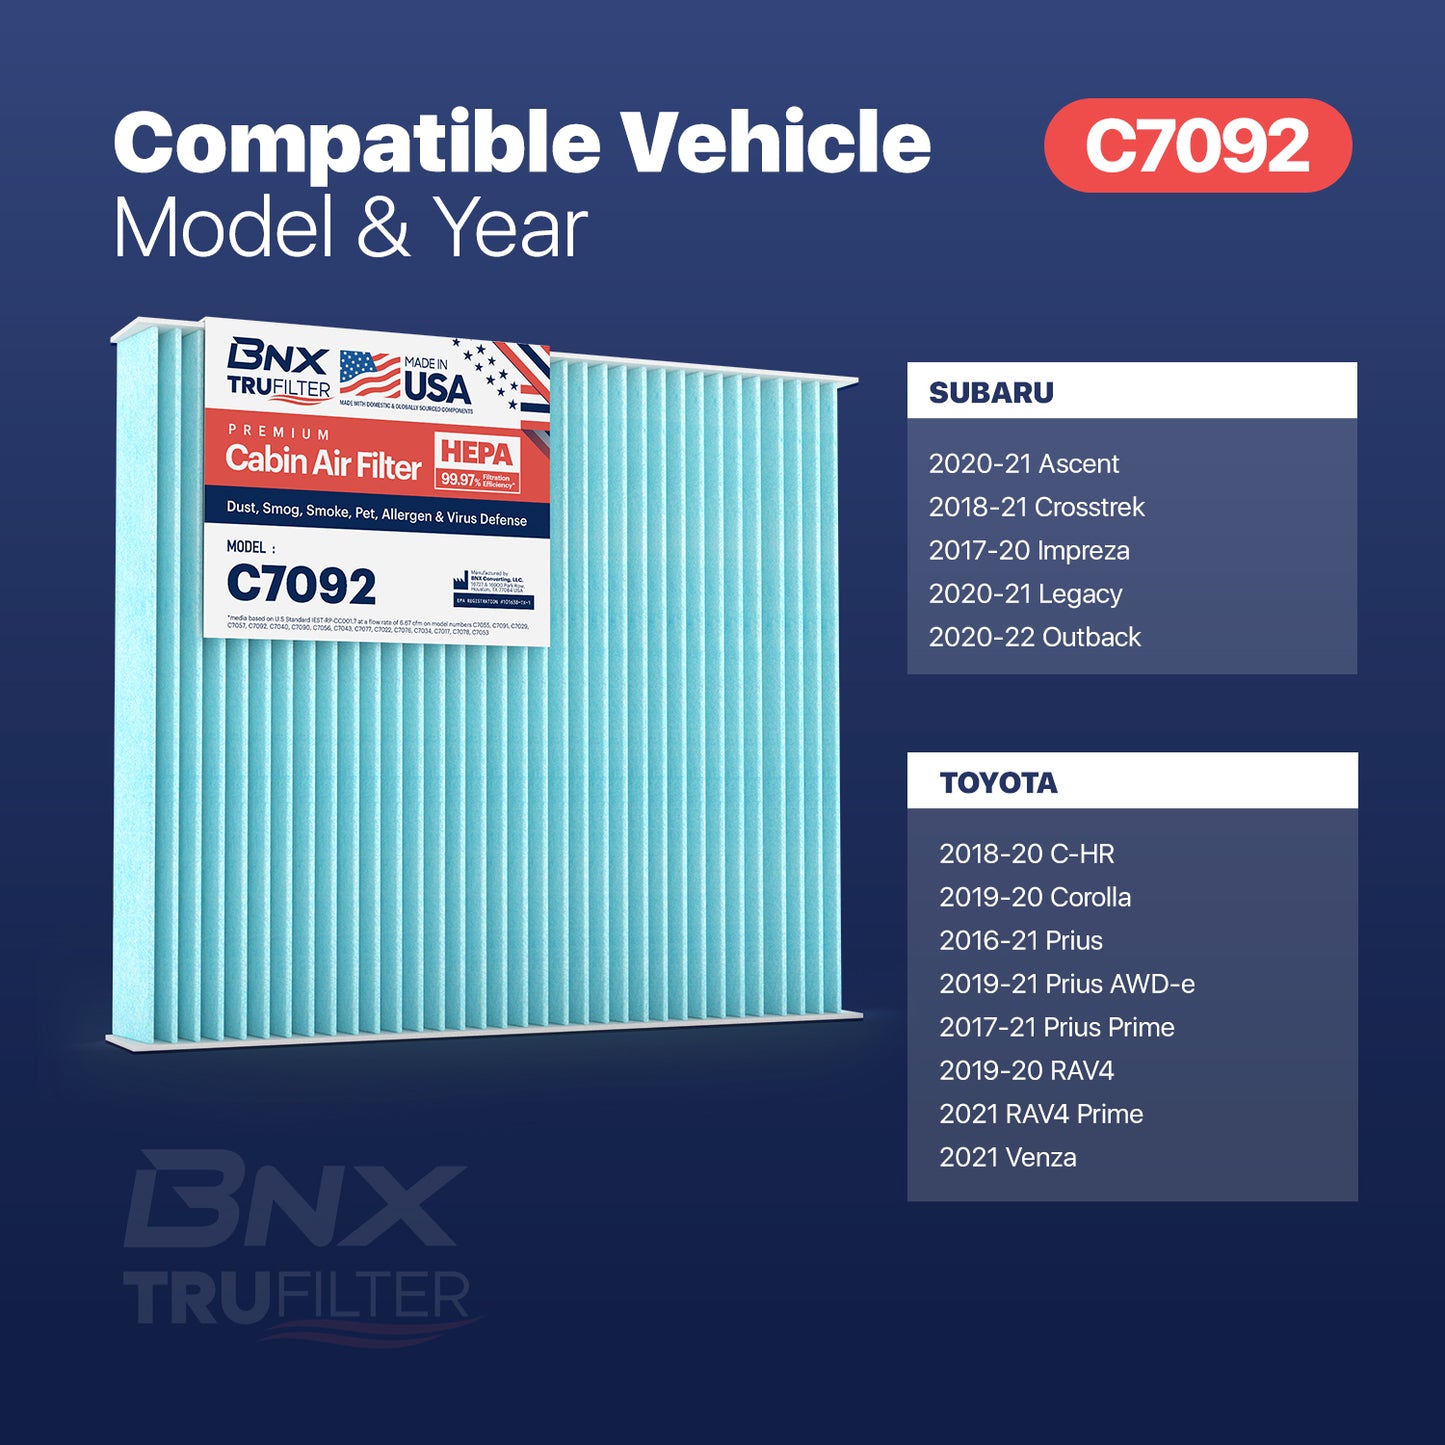 BNX TruFilter C7092 Cabin Air Filter, 99.97% HEPA, MADE IN USA Compatible with Subaru Crosstrek, Ascent, Impreza, Legacy, Outback, Toyota Prius C-HR, Prius AWD-e, Prius Prime, Corolla, RAV4, RAV4 Prime, Venza